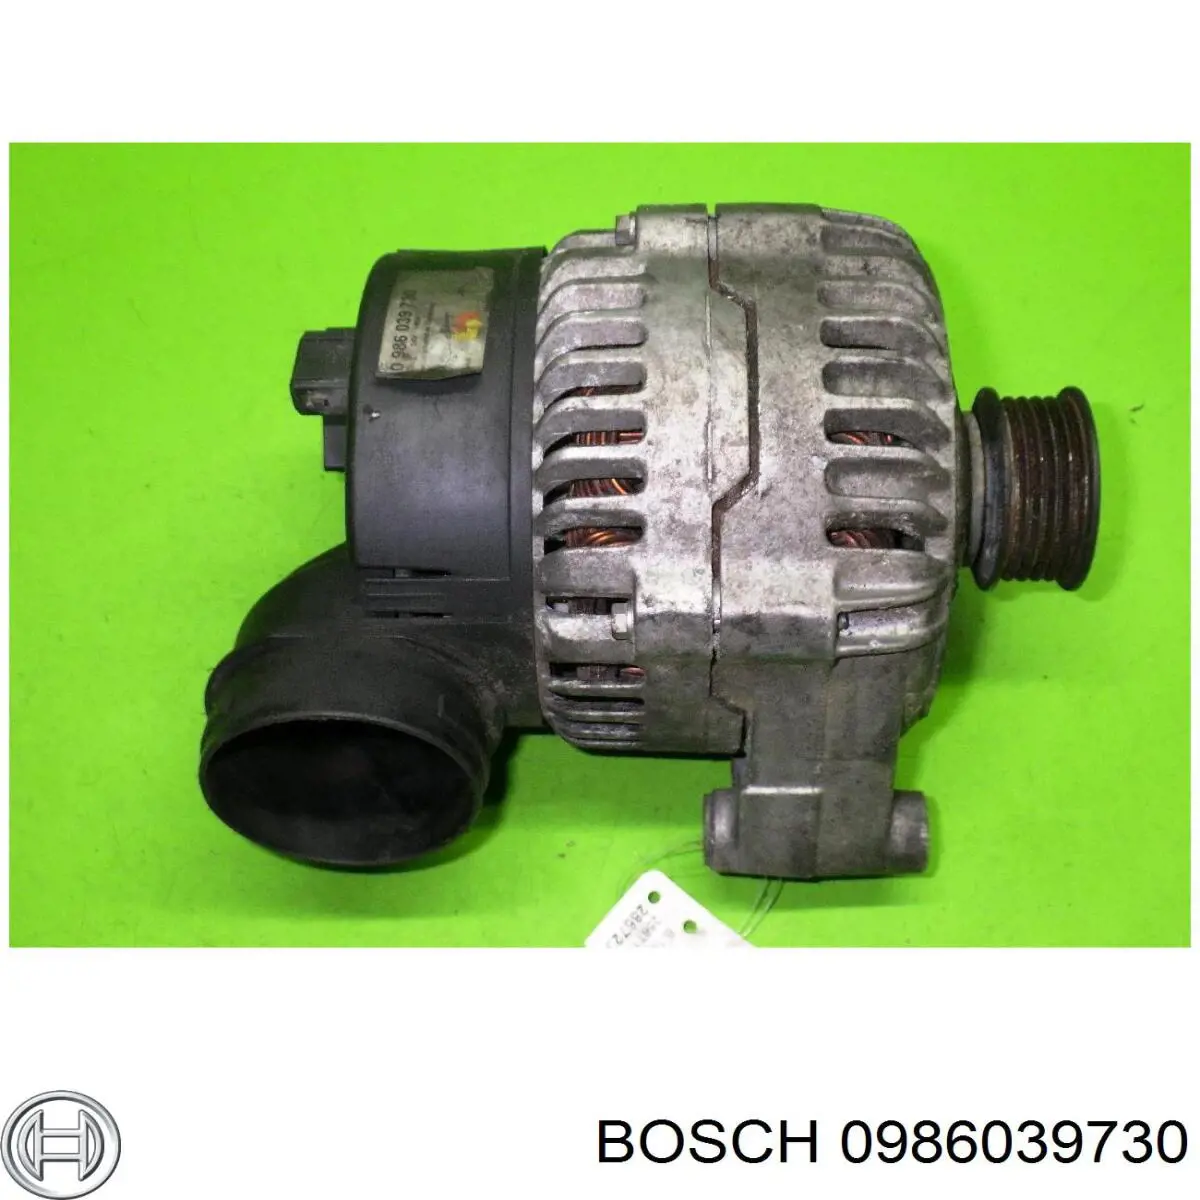 0986039730 Bosch alternador